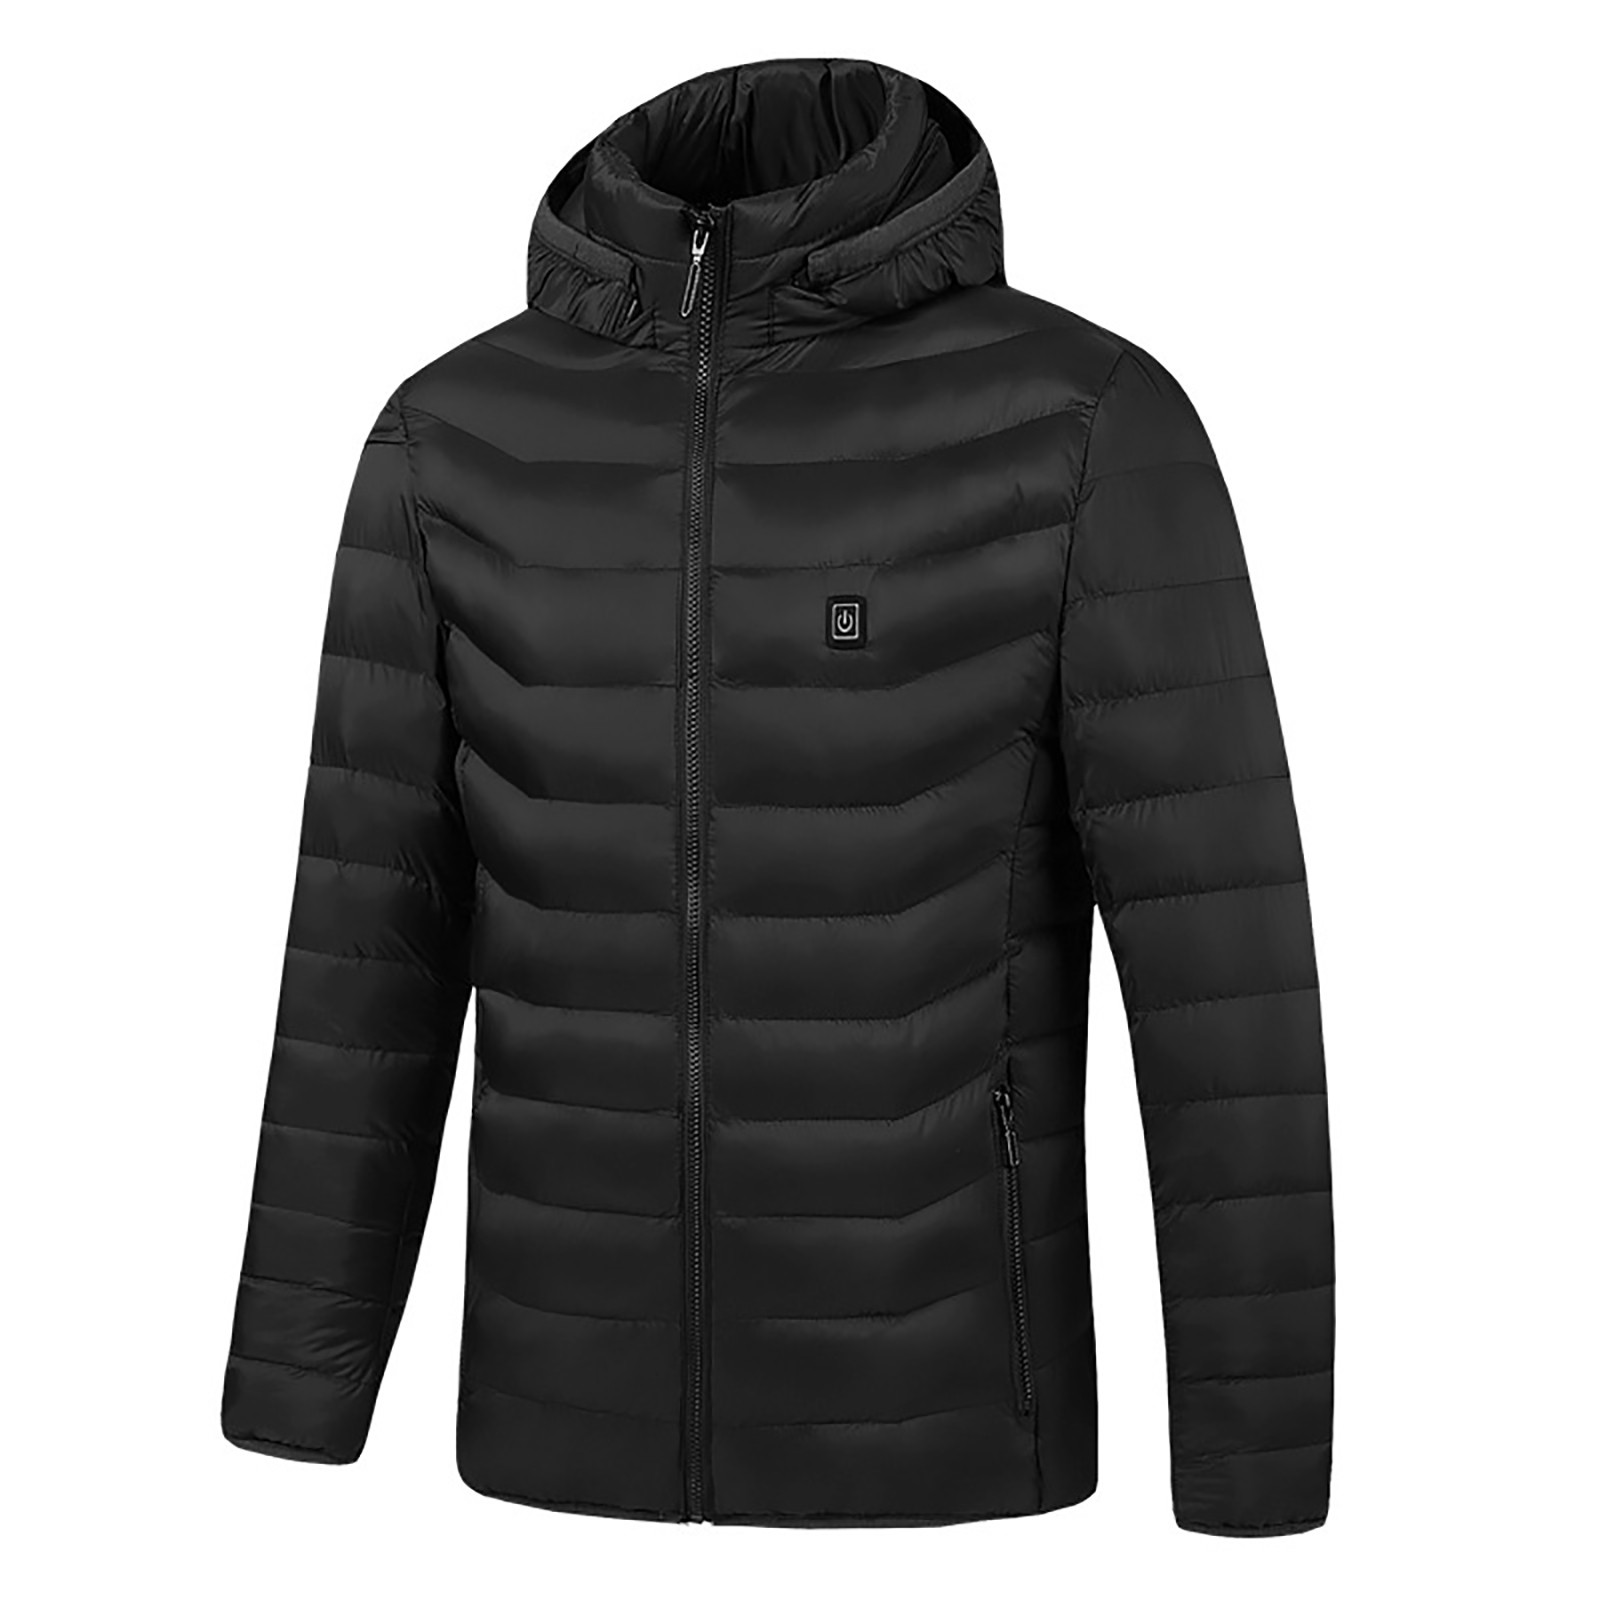 yievot Heated Jacket for Men Women Smart Electric USB Heated Coat ...